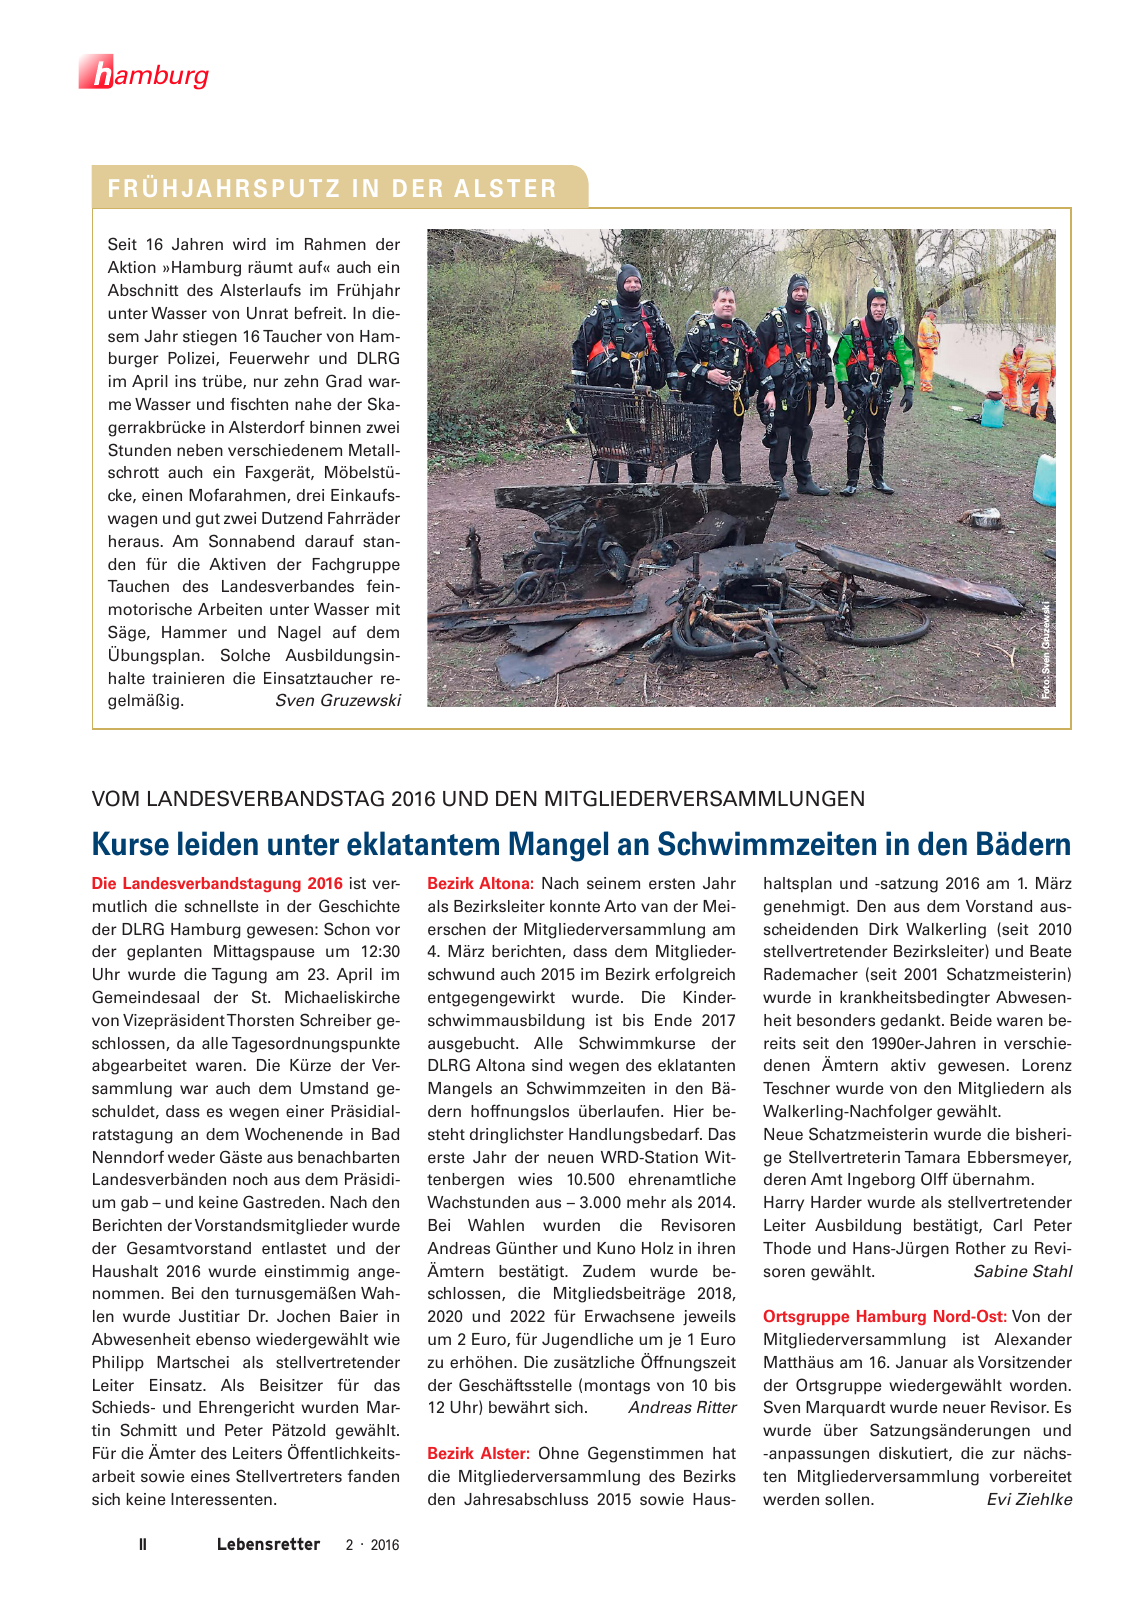 Vorschau Lebensretter 2/2016 - Regionalausgabe Hamburg Seite 4